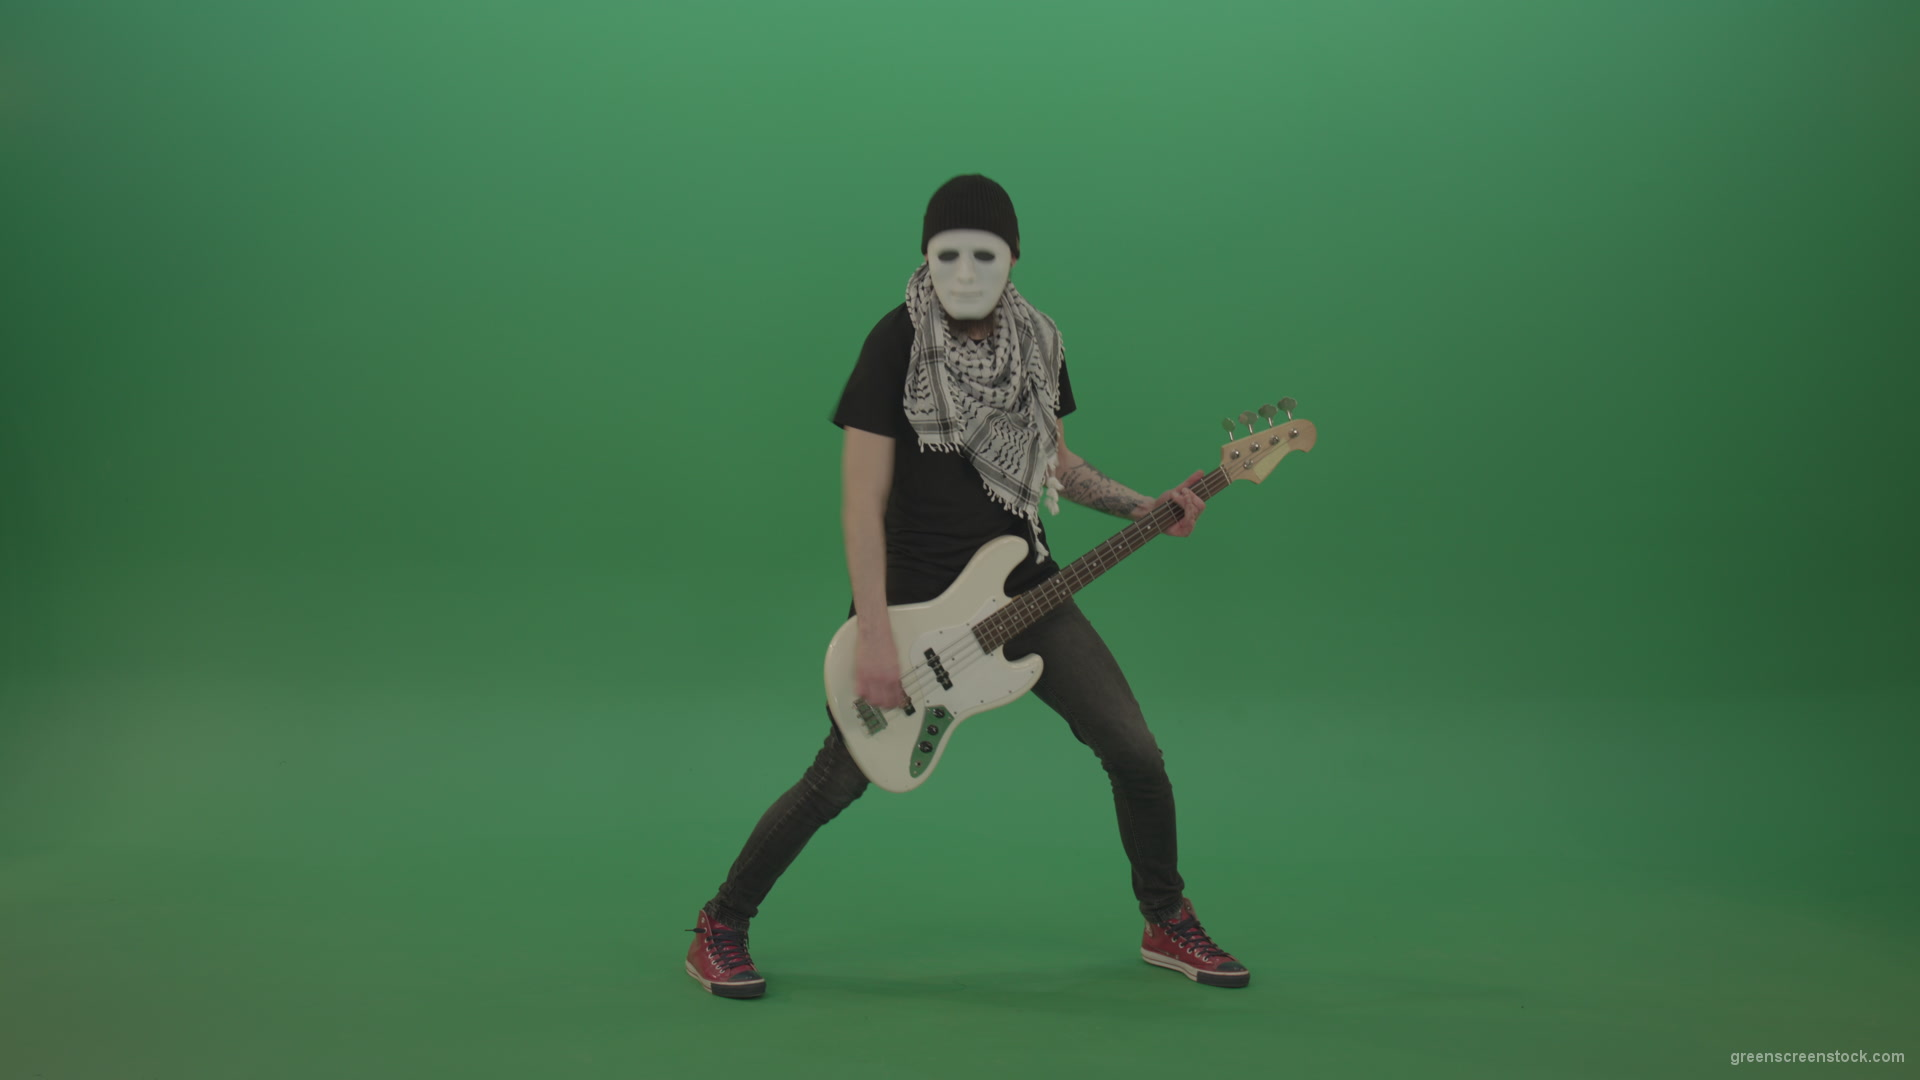 Bass-man-in-white-mask-play-guitar-on-green-screen_004 Green Screen Stock